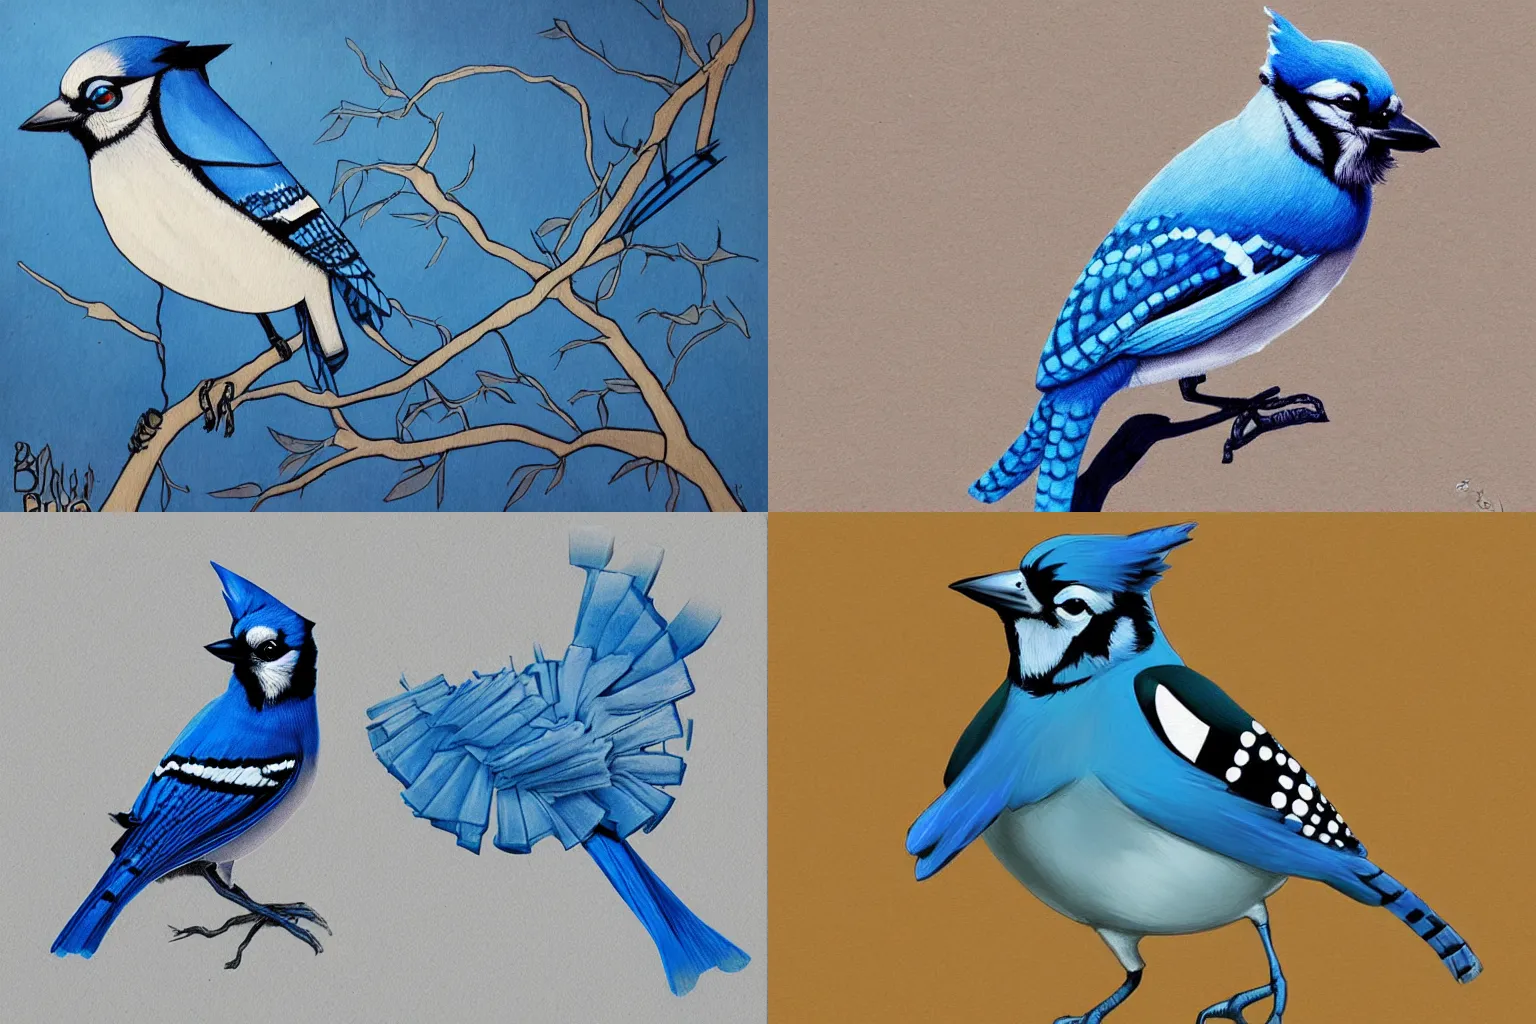 Prompt: blue jay bird in the style of artist Barrett Biggers